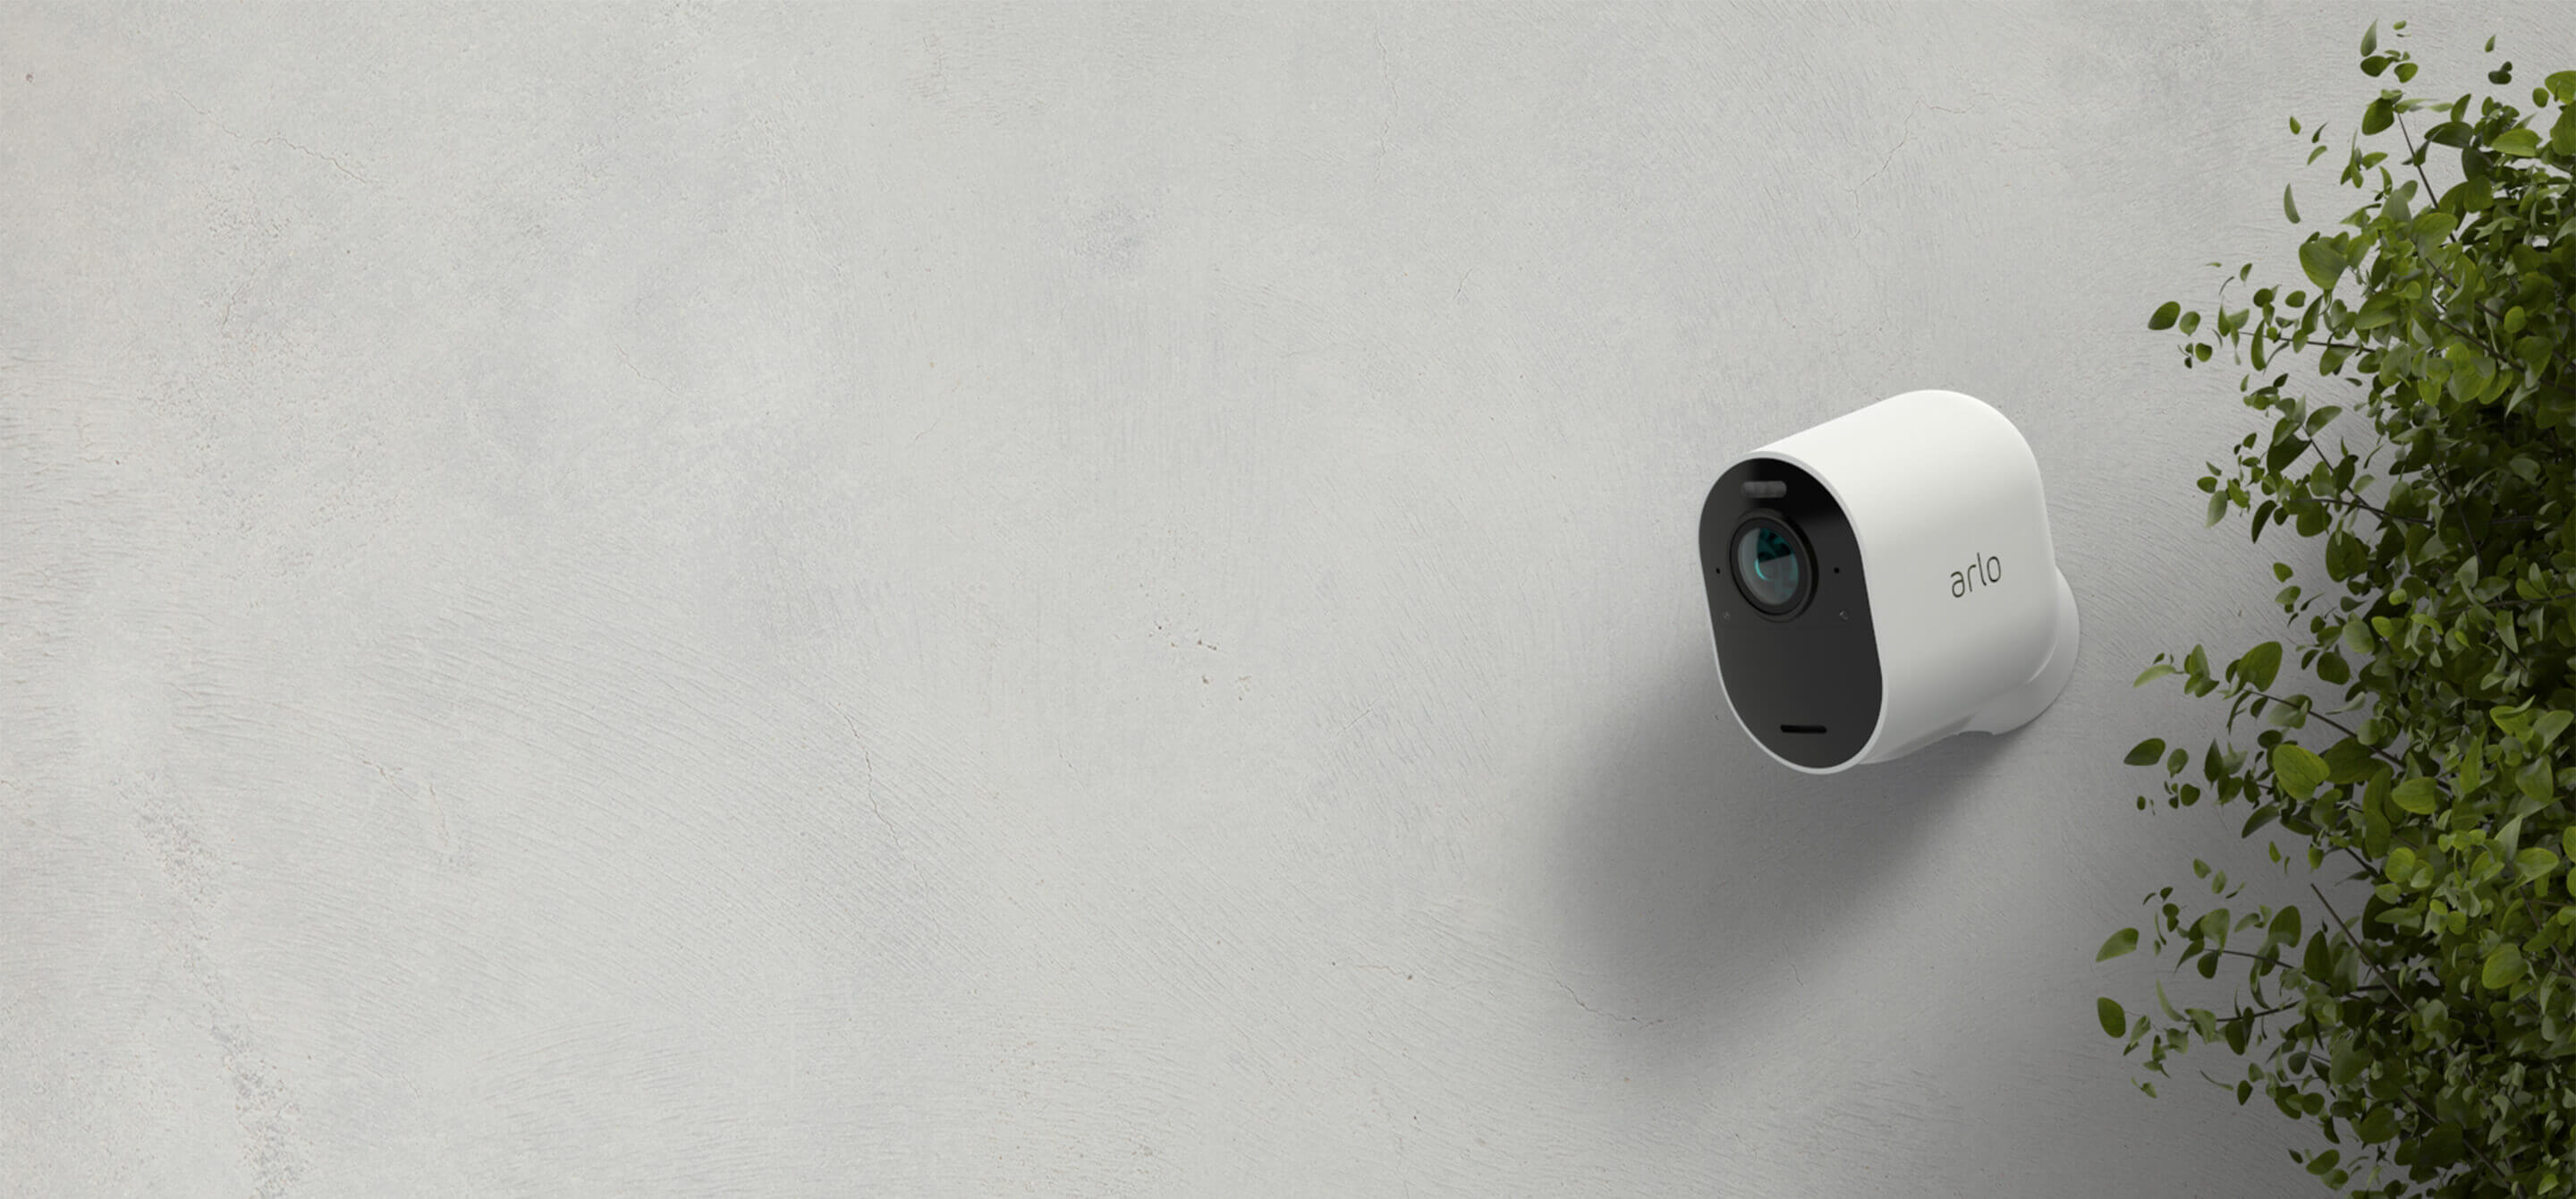 Advanced Wireless Security Camera System